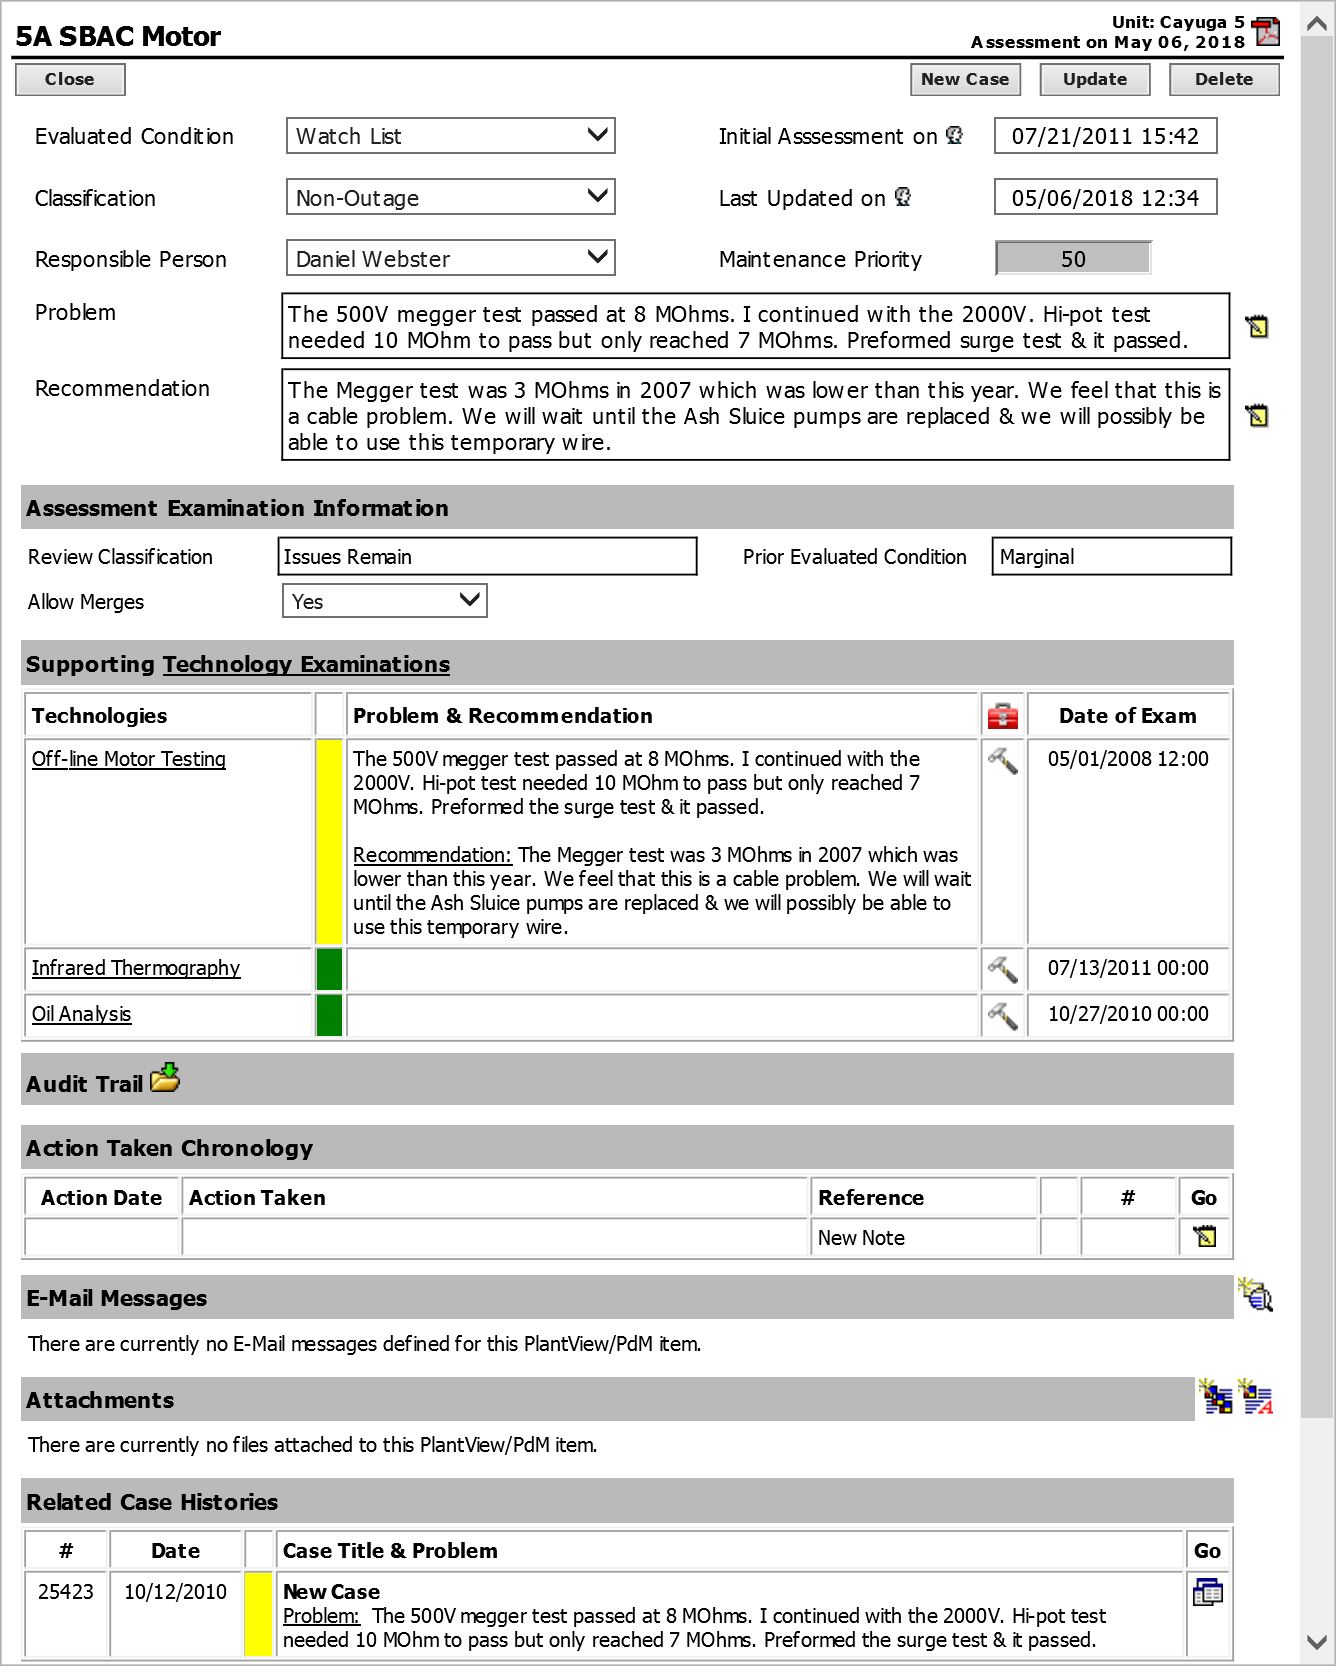 Equipment assessment form screen print